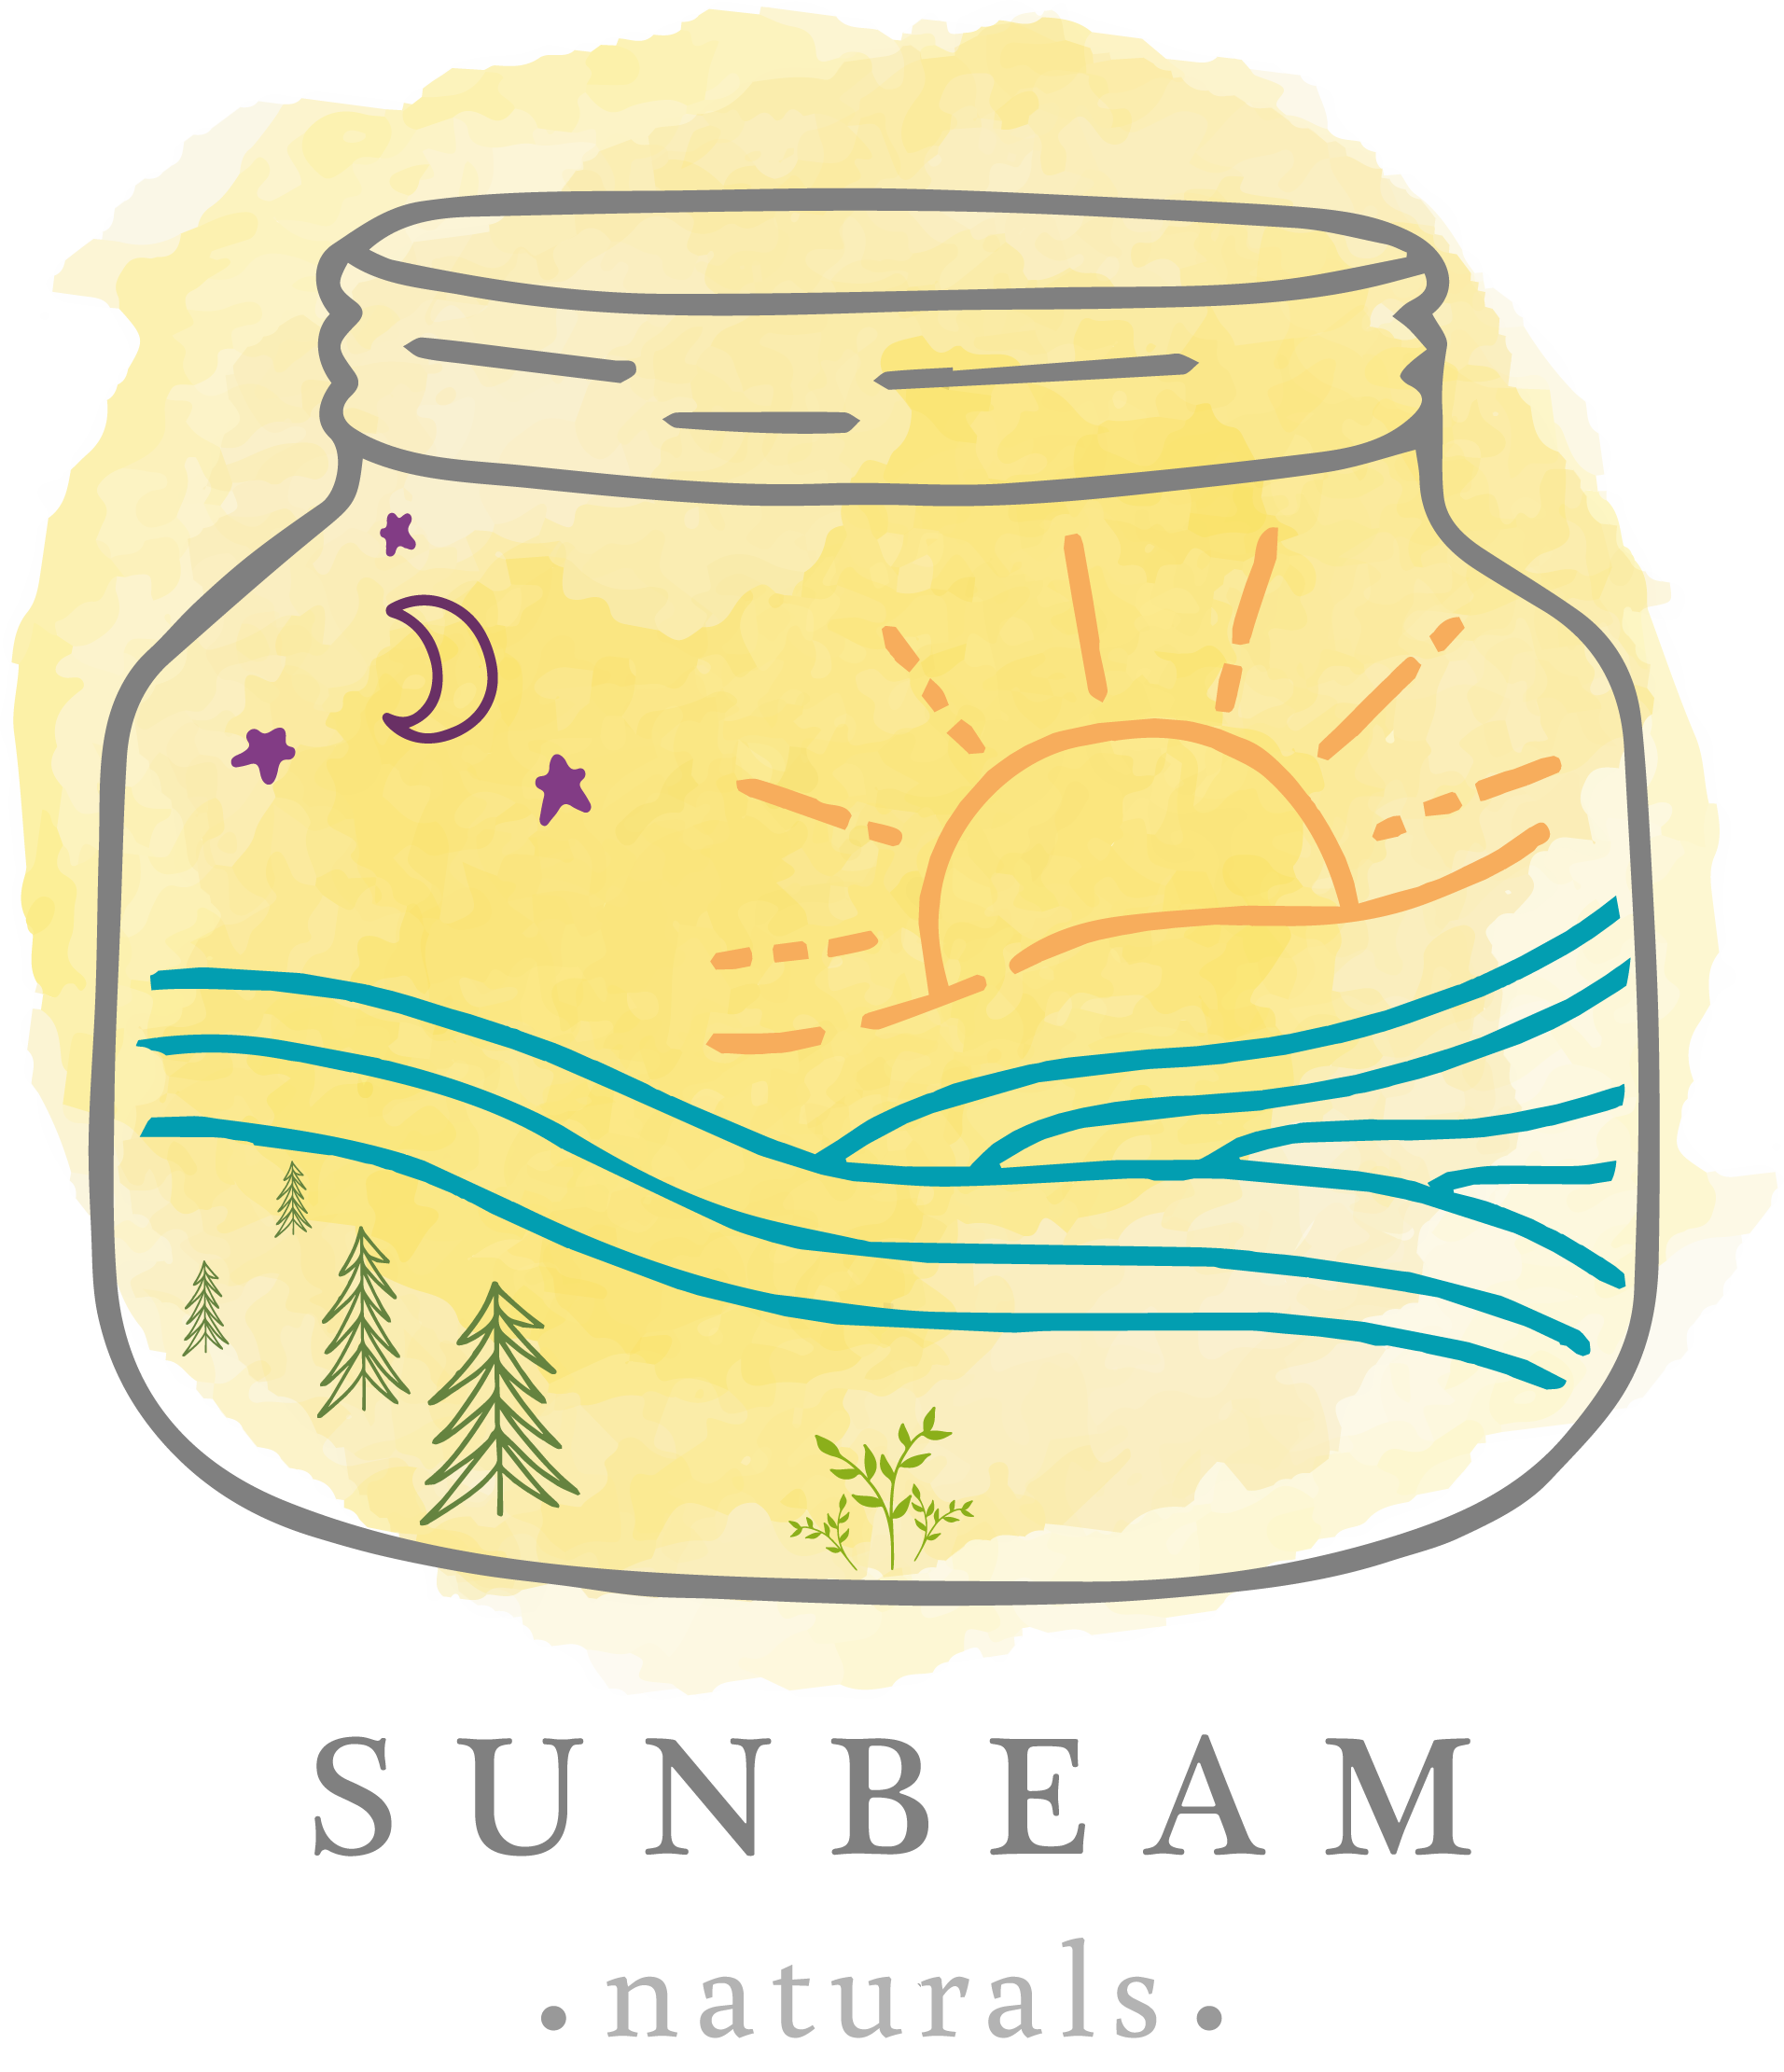 Sunbeam - Adventist Youth Ministries